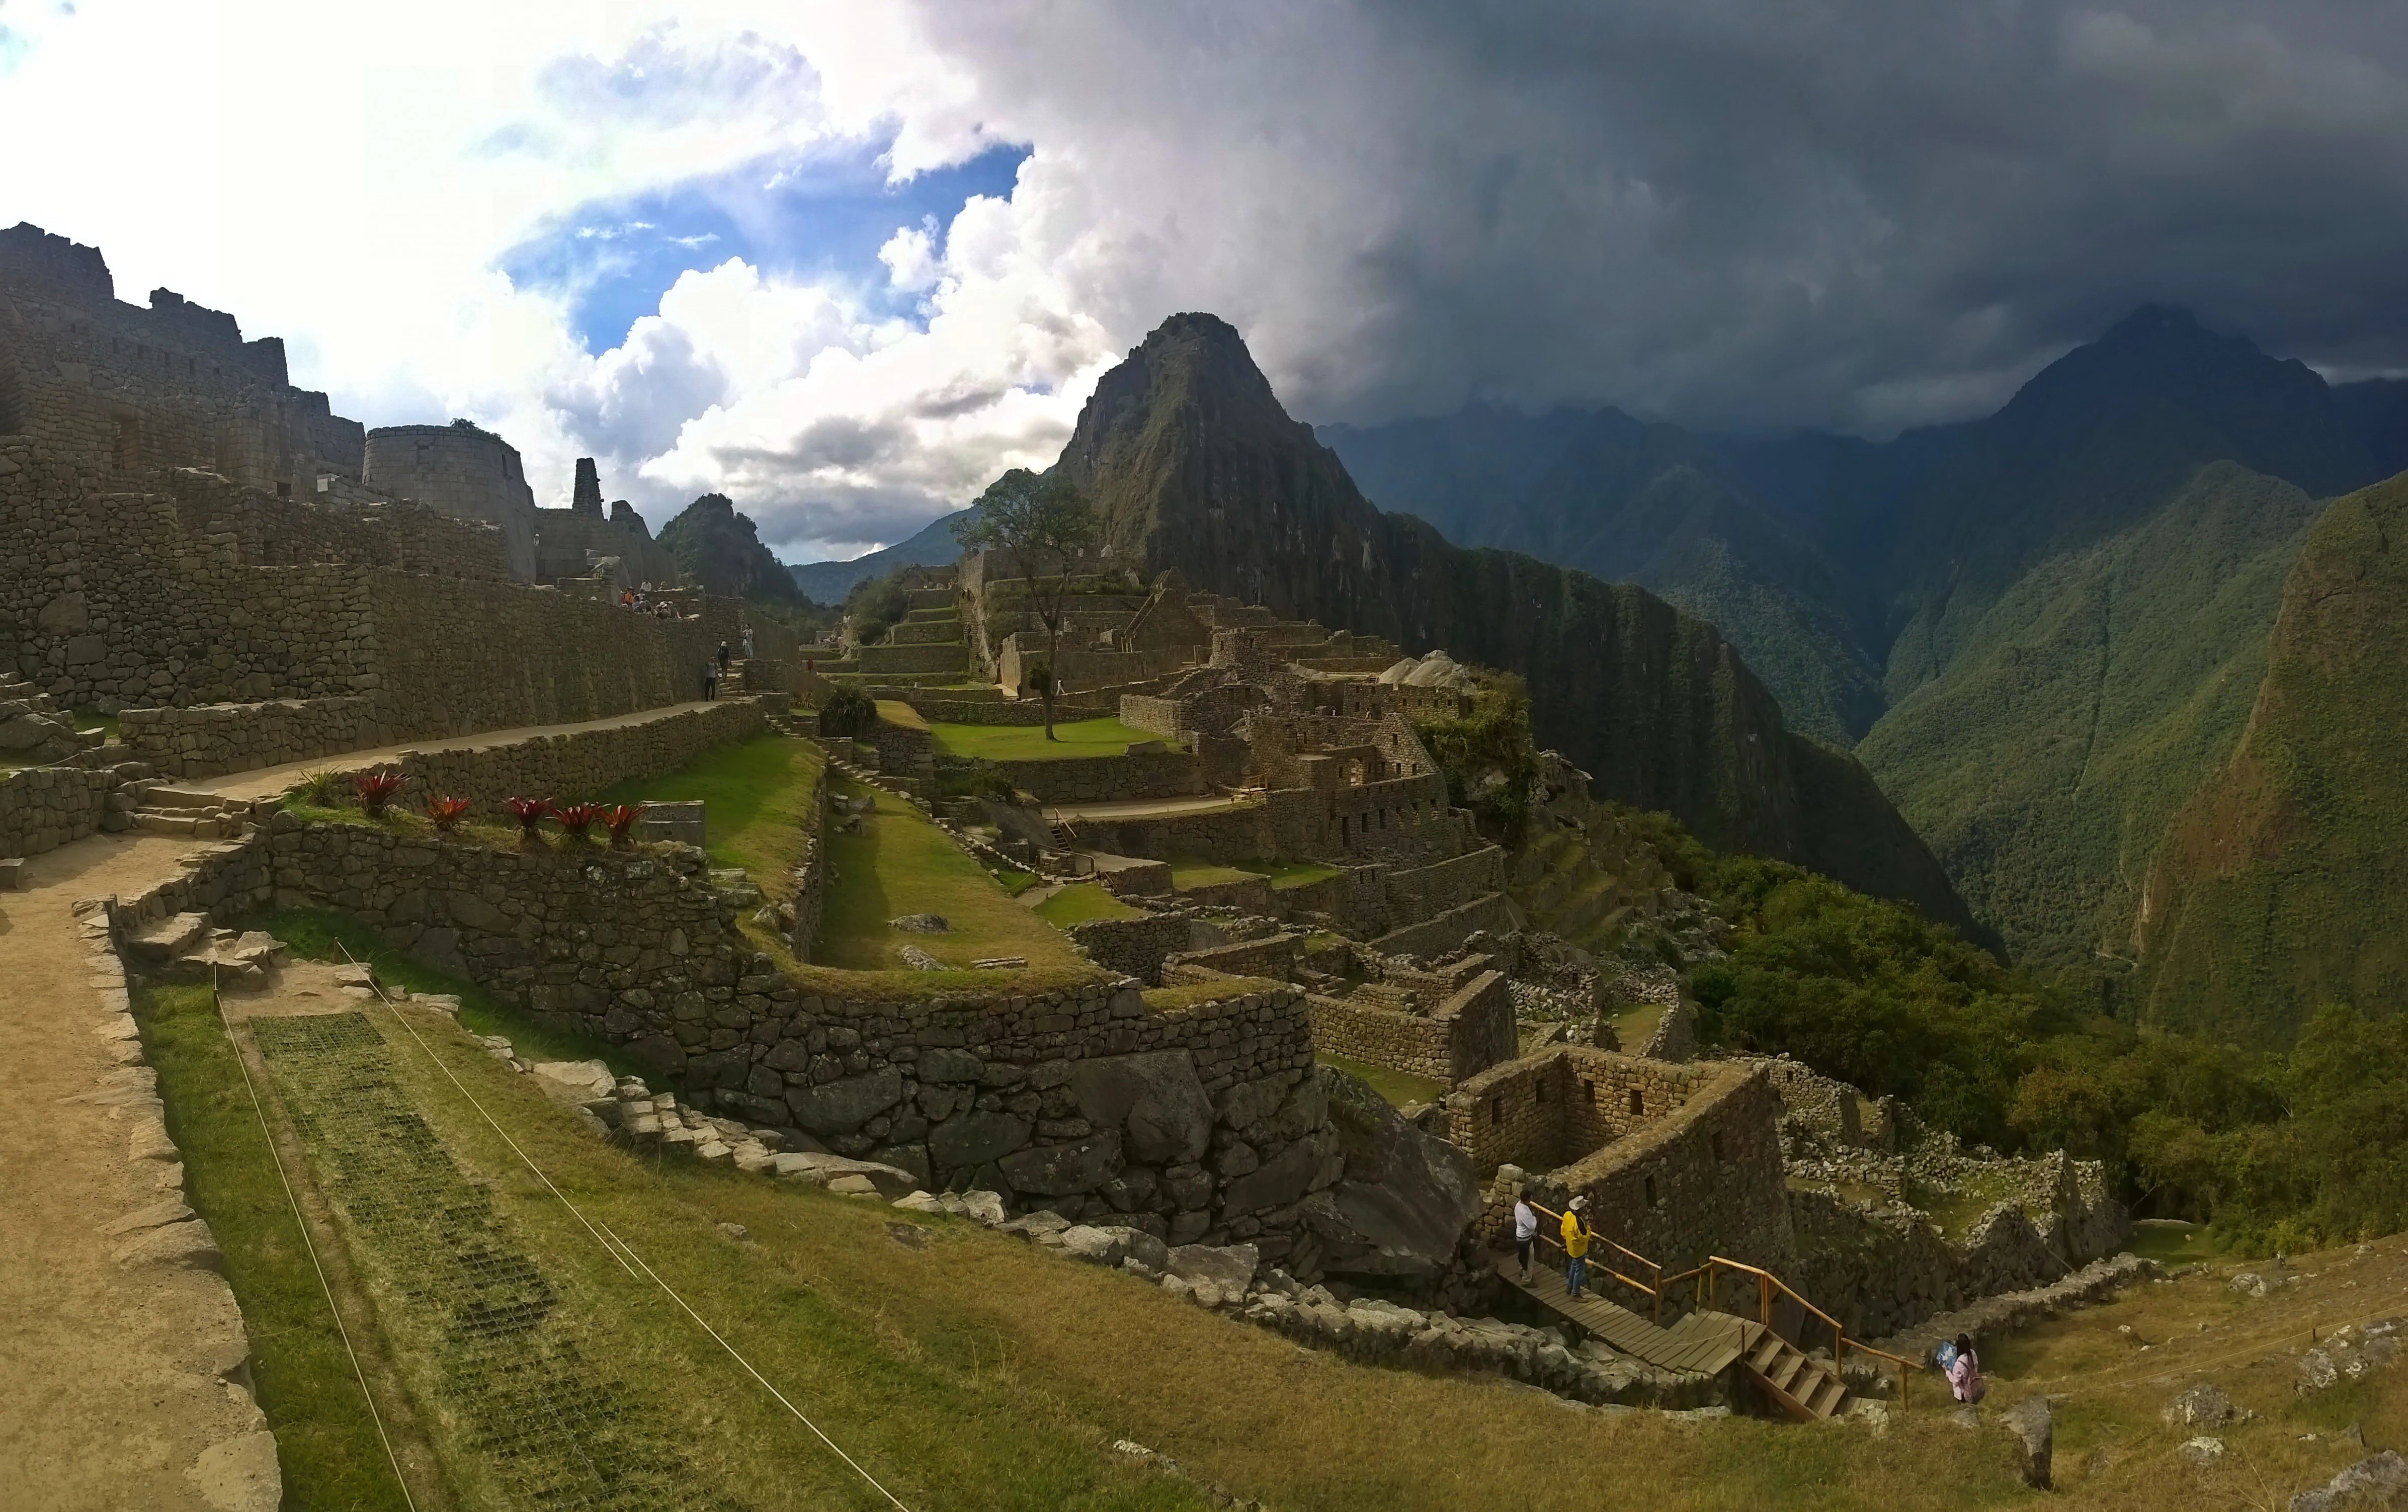 Explorando las maravillas de Machu Picchu